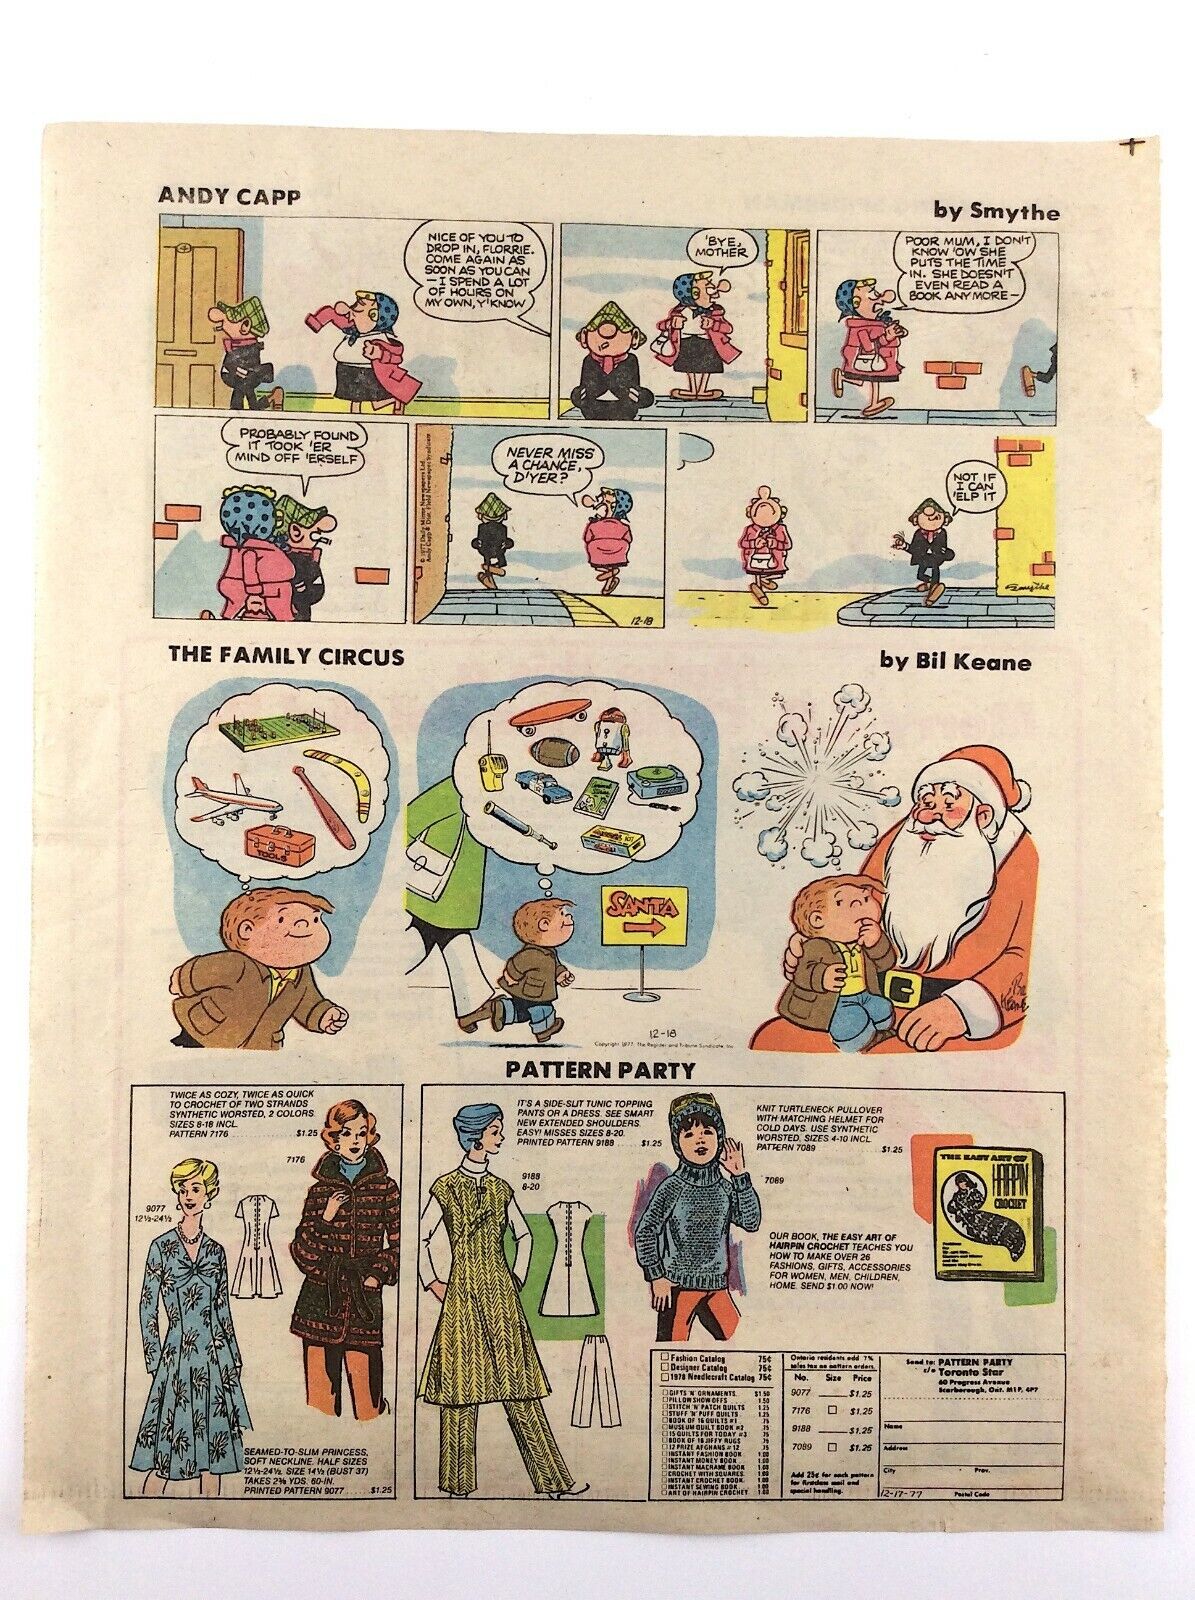 1977 Andy Capp Family Circus Amazing Spiderman Newspaper News Comics Ads N030